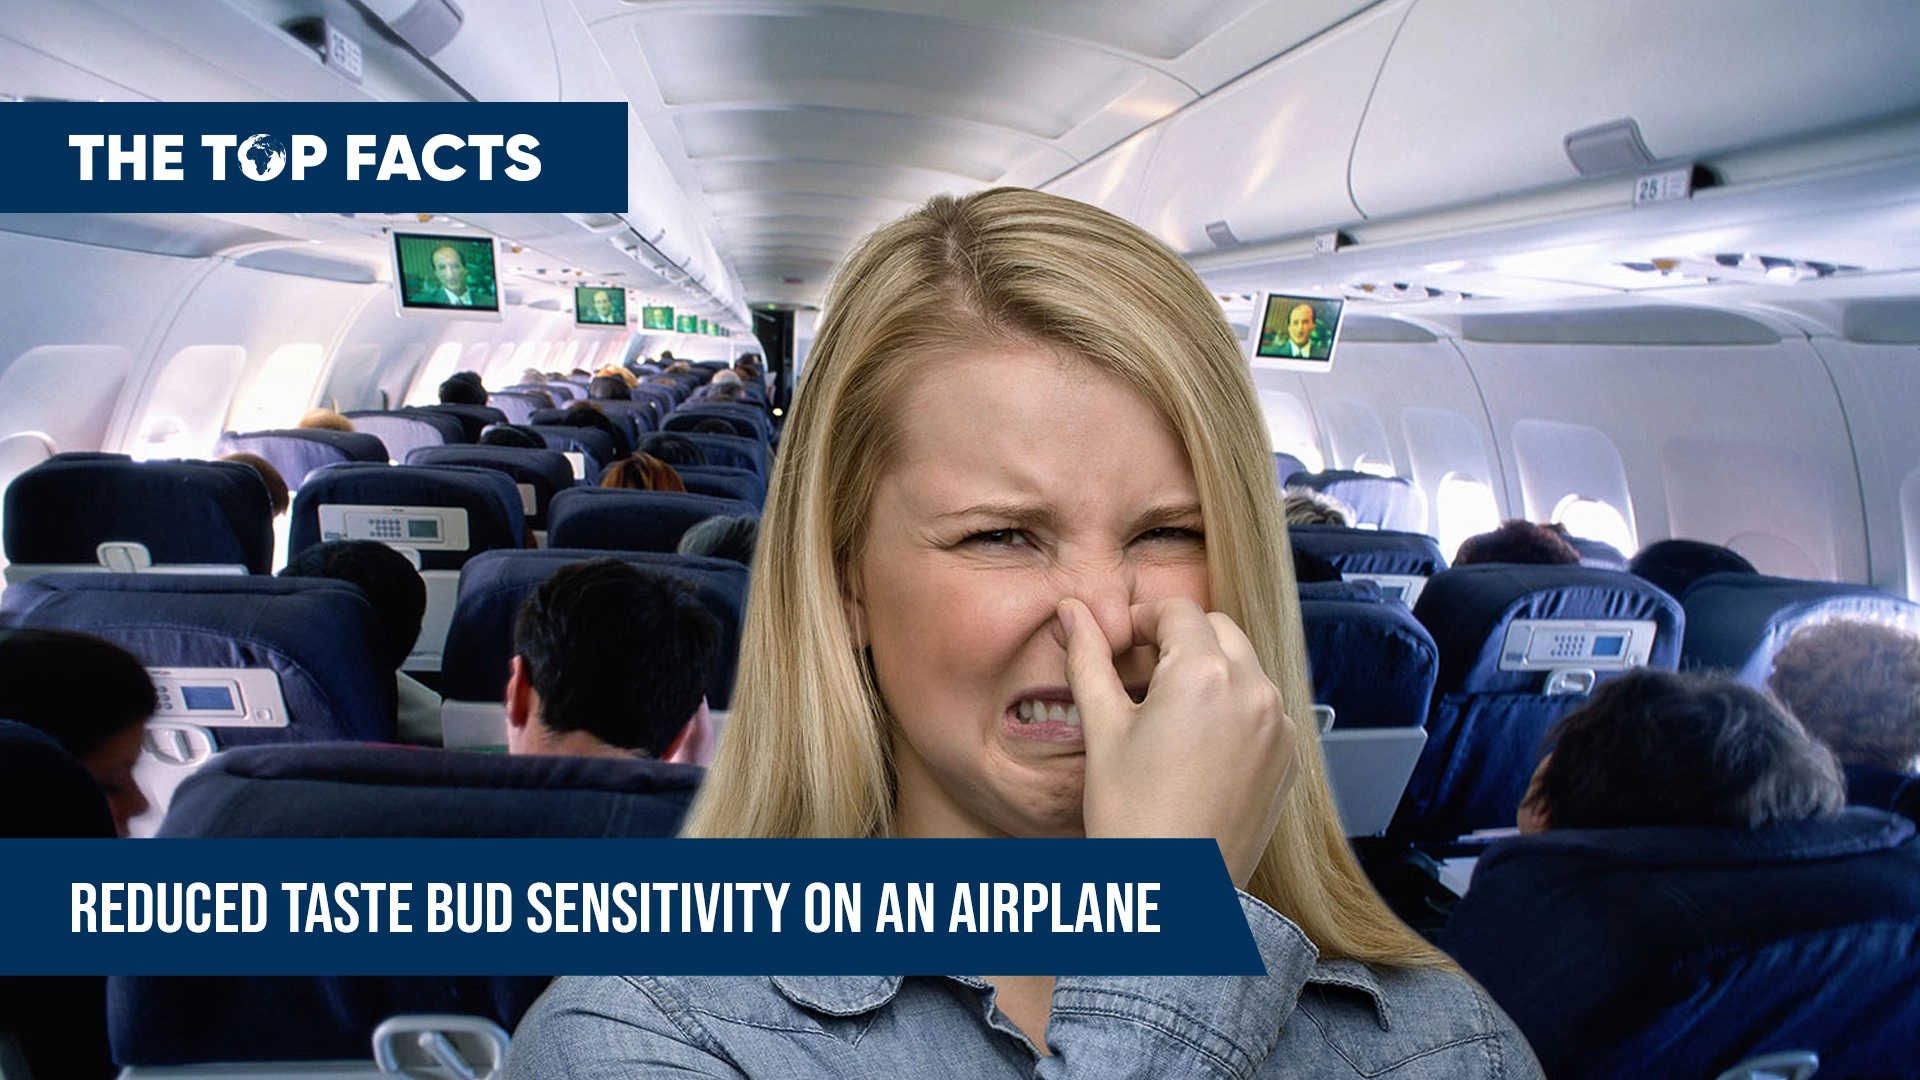 Reduced taste bud sensitivity on an airplane